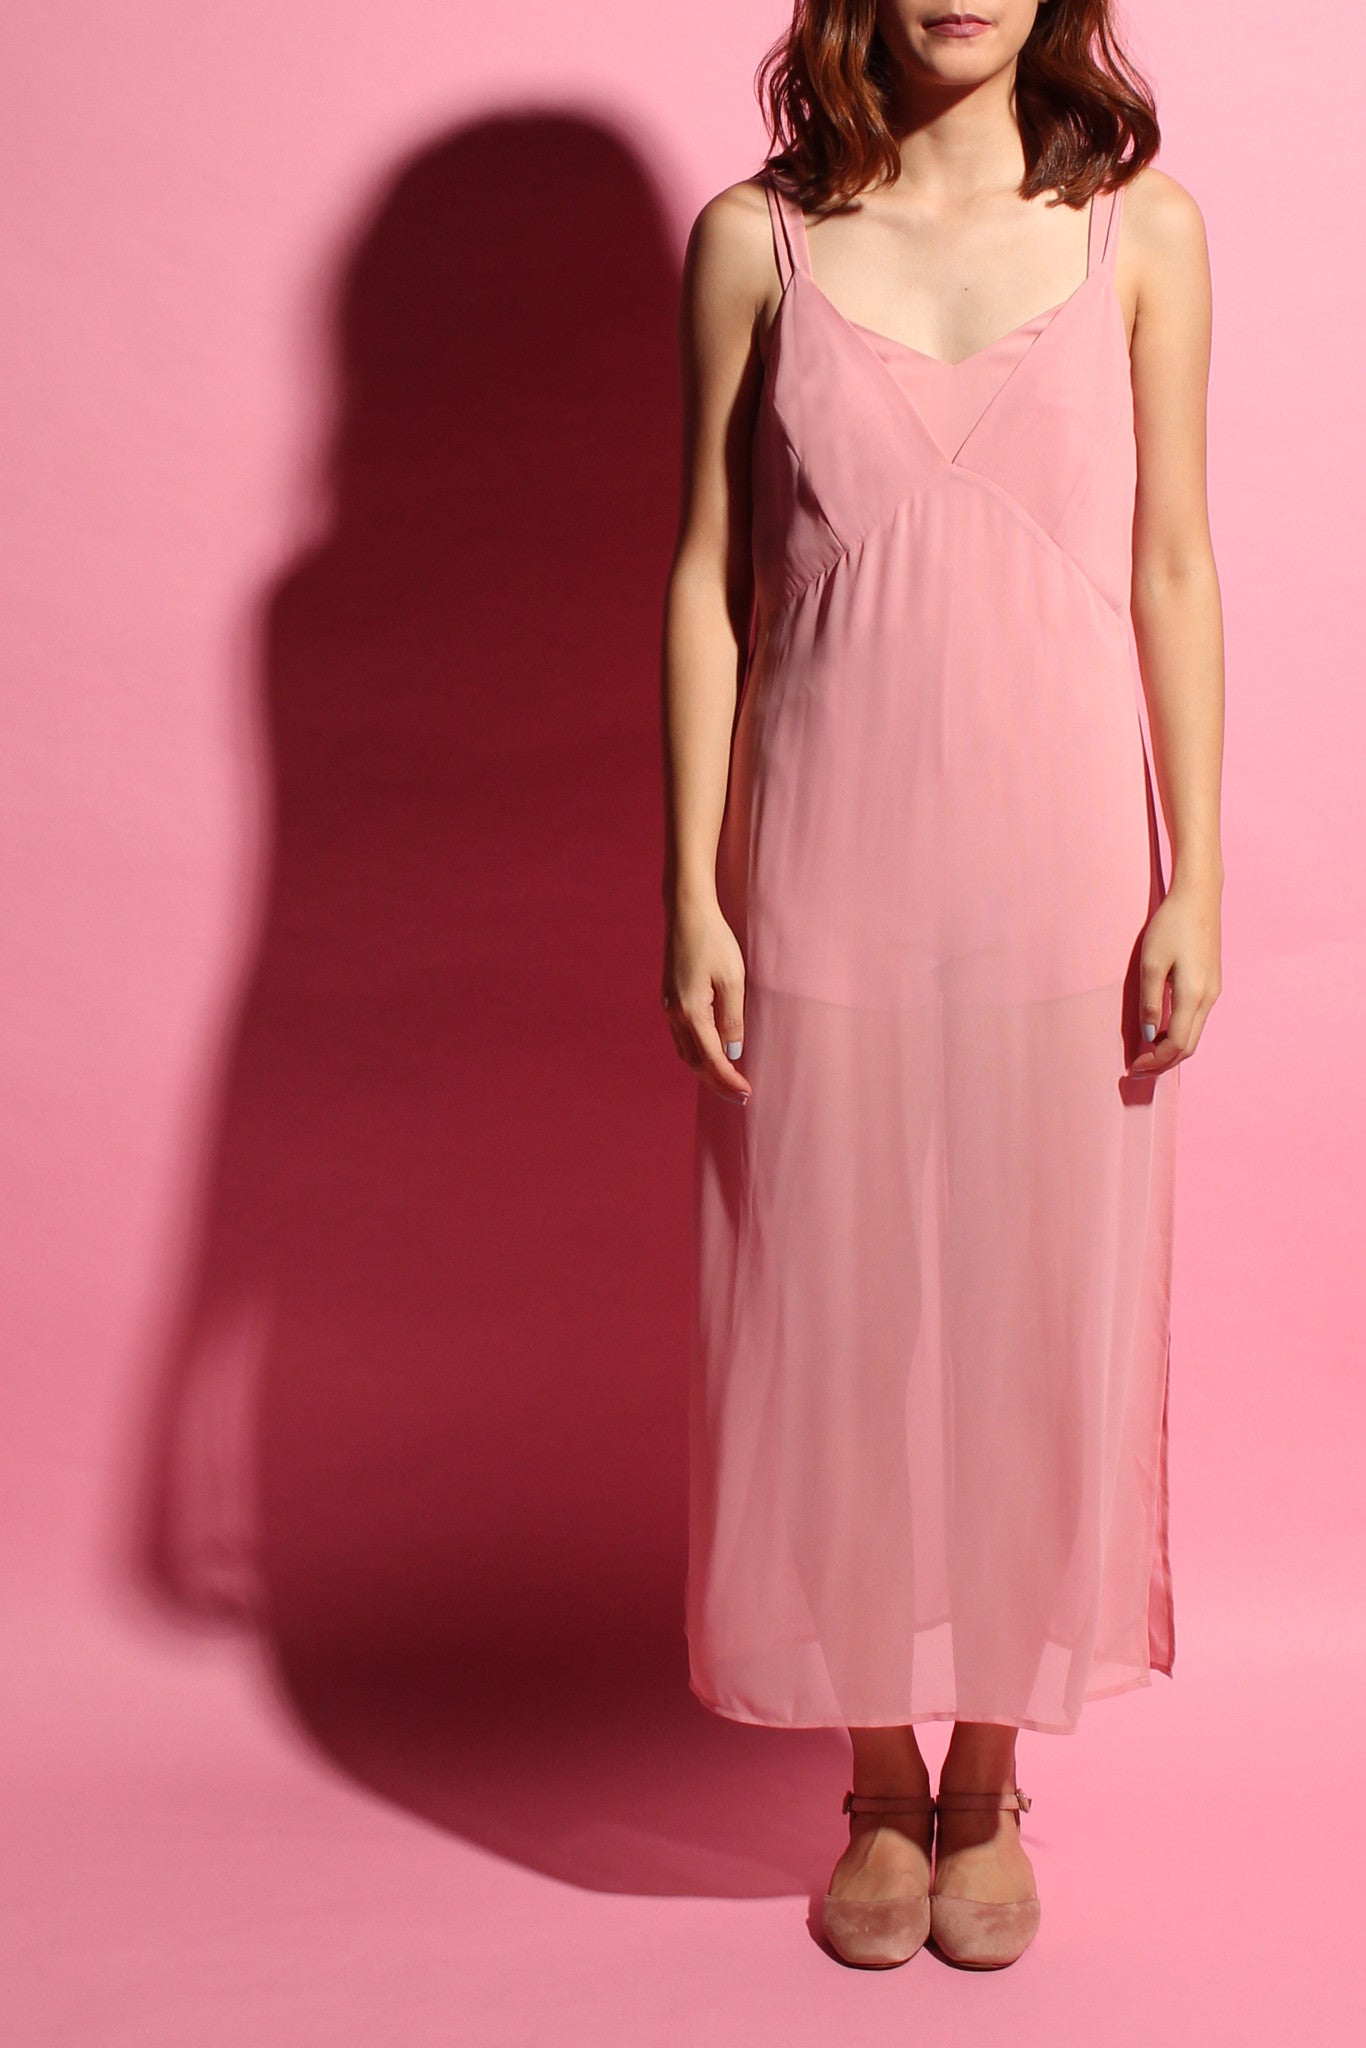 Romper Slip Dress - Blush Pink